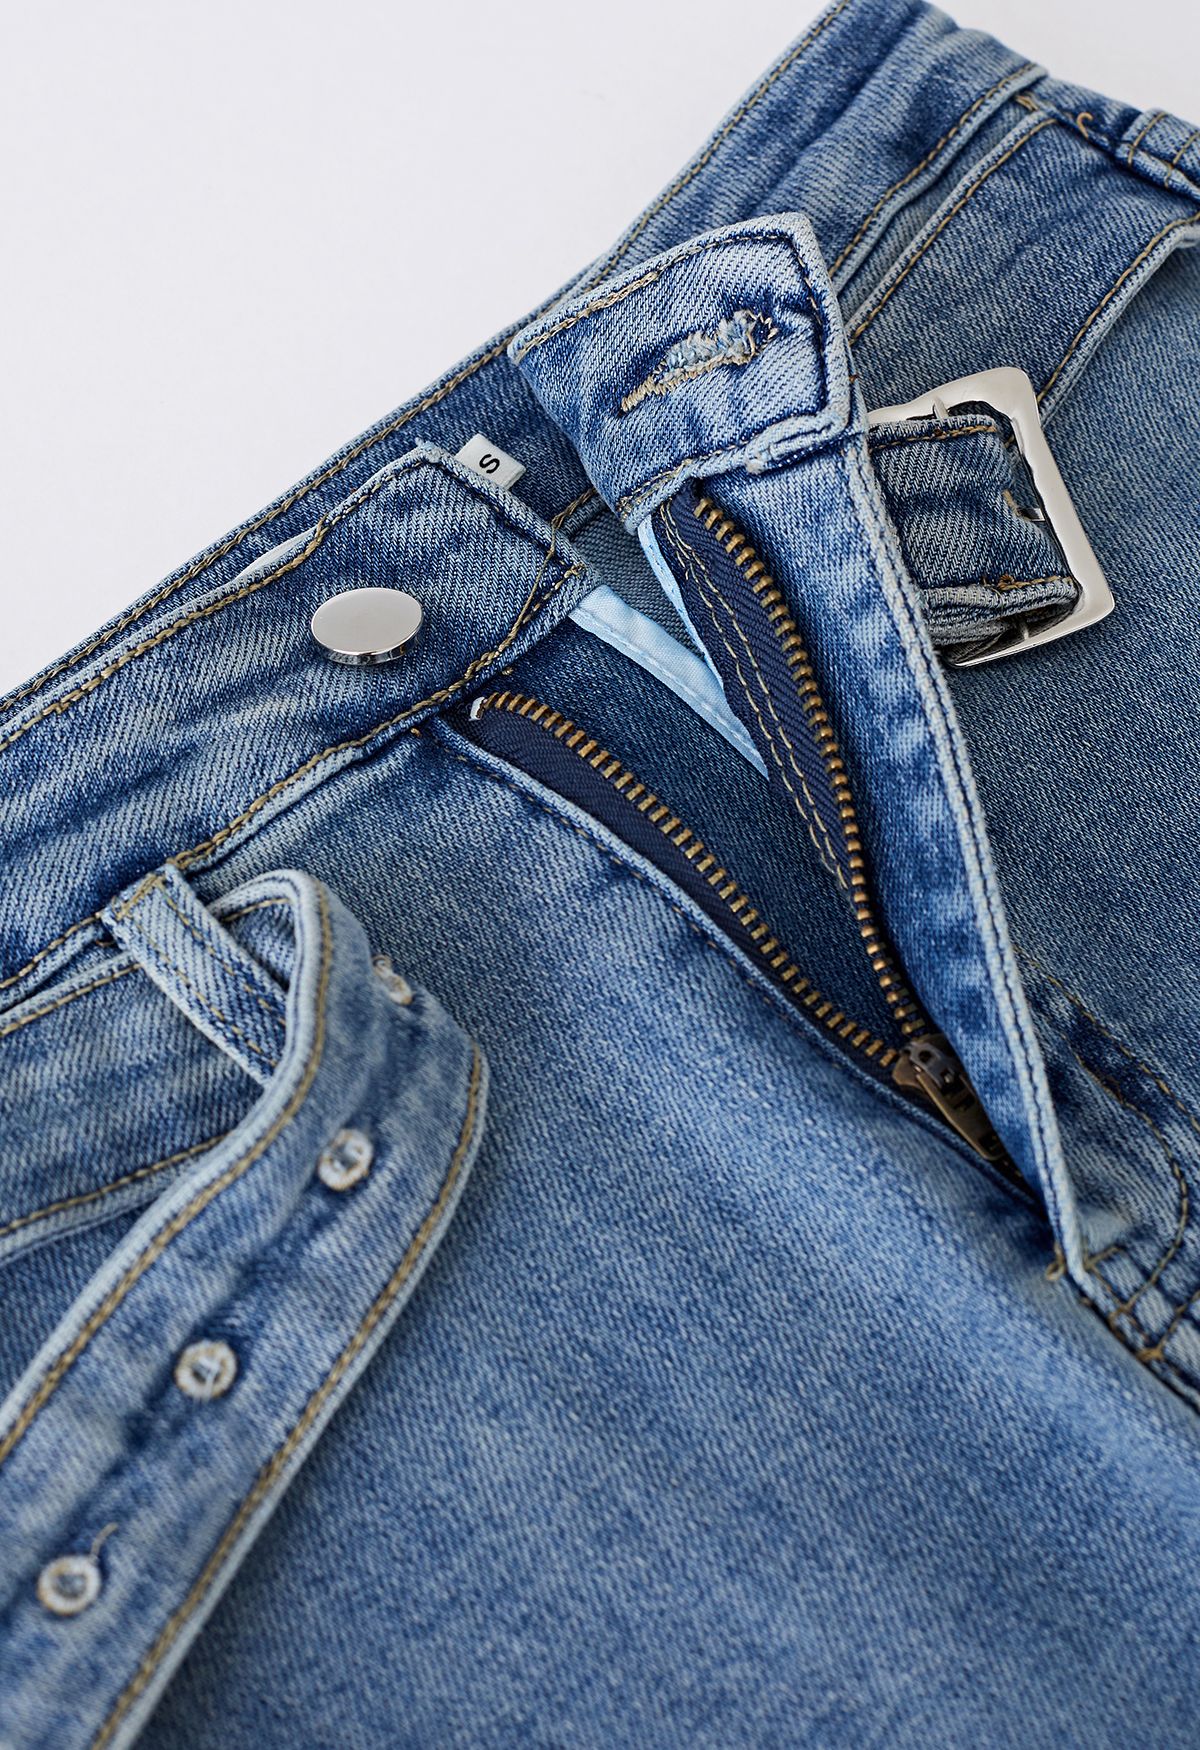 Flare-Jeans in Dunkelblau mit Gürtel